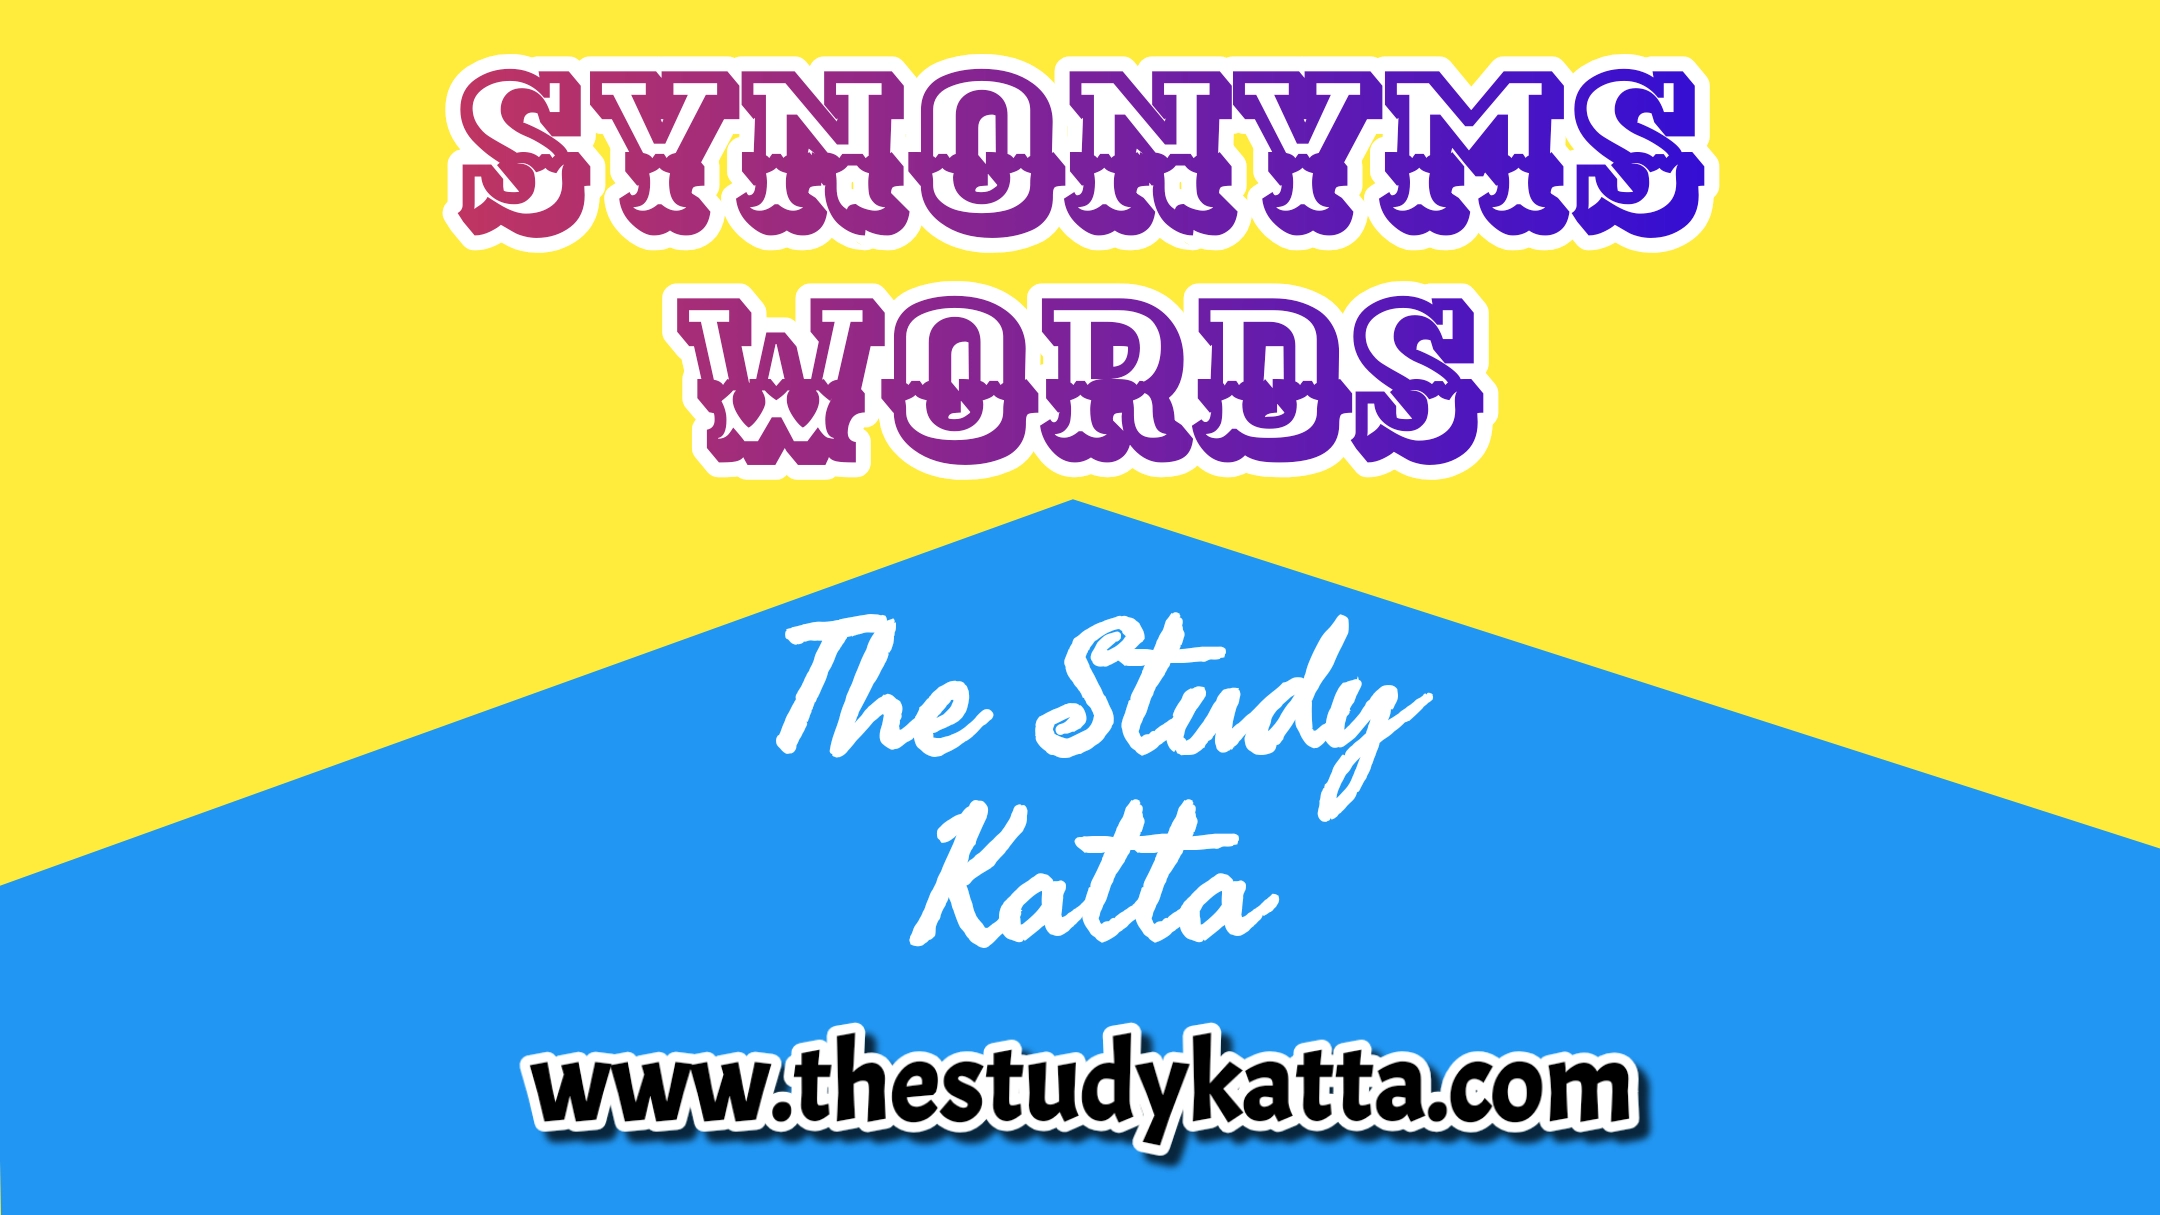 Lovely Lyrics synonyms - 8 Words and Phrases for Lovely Lyrics